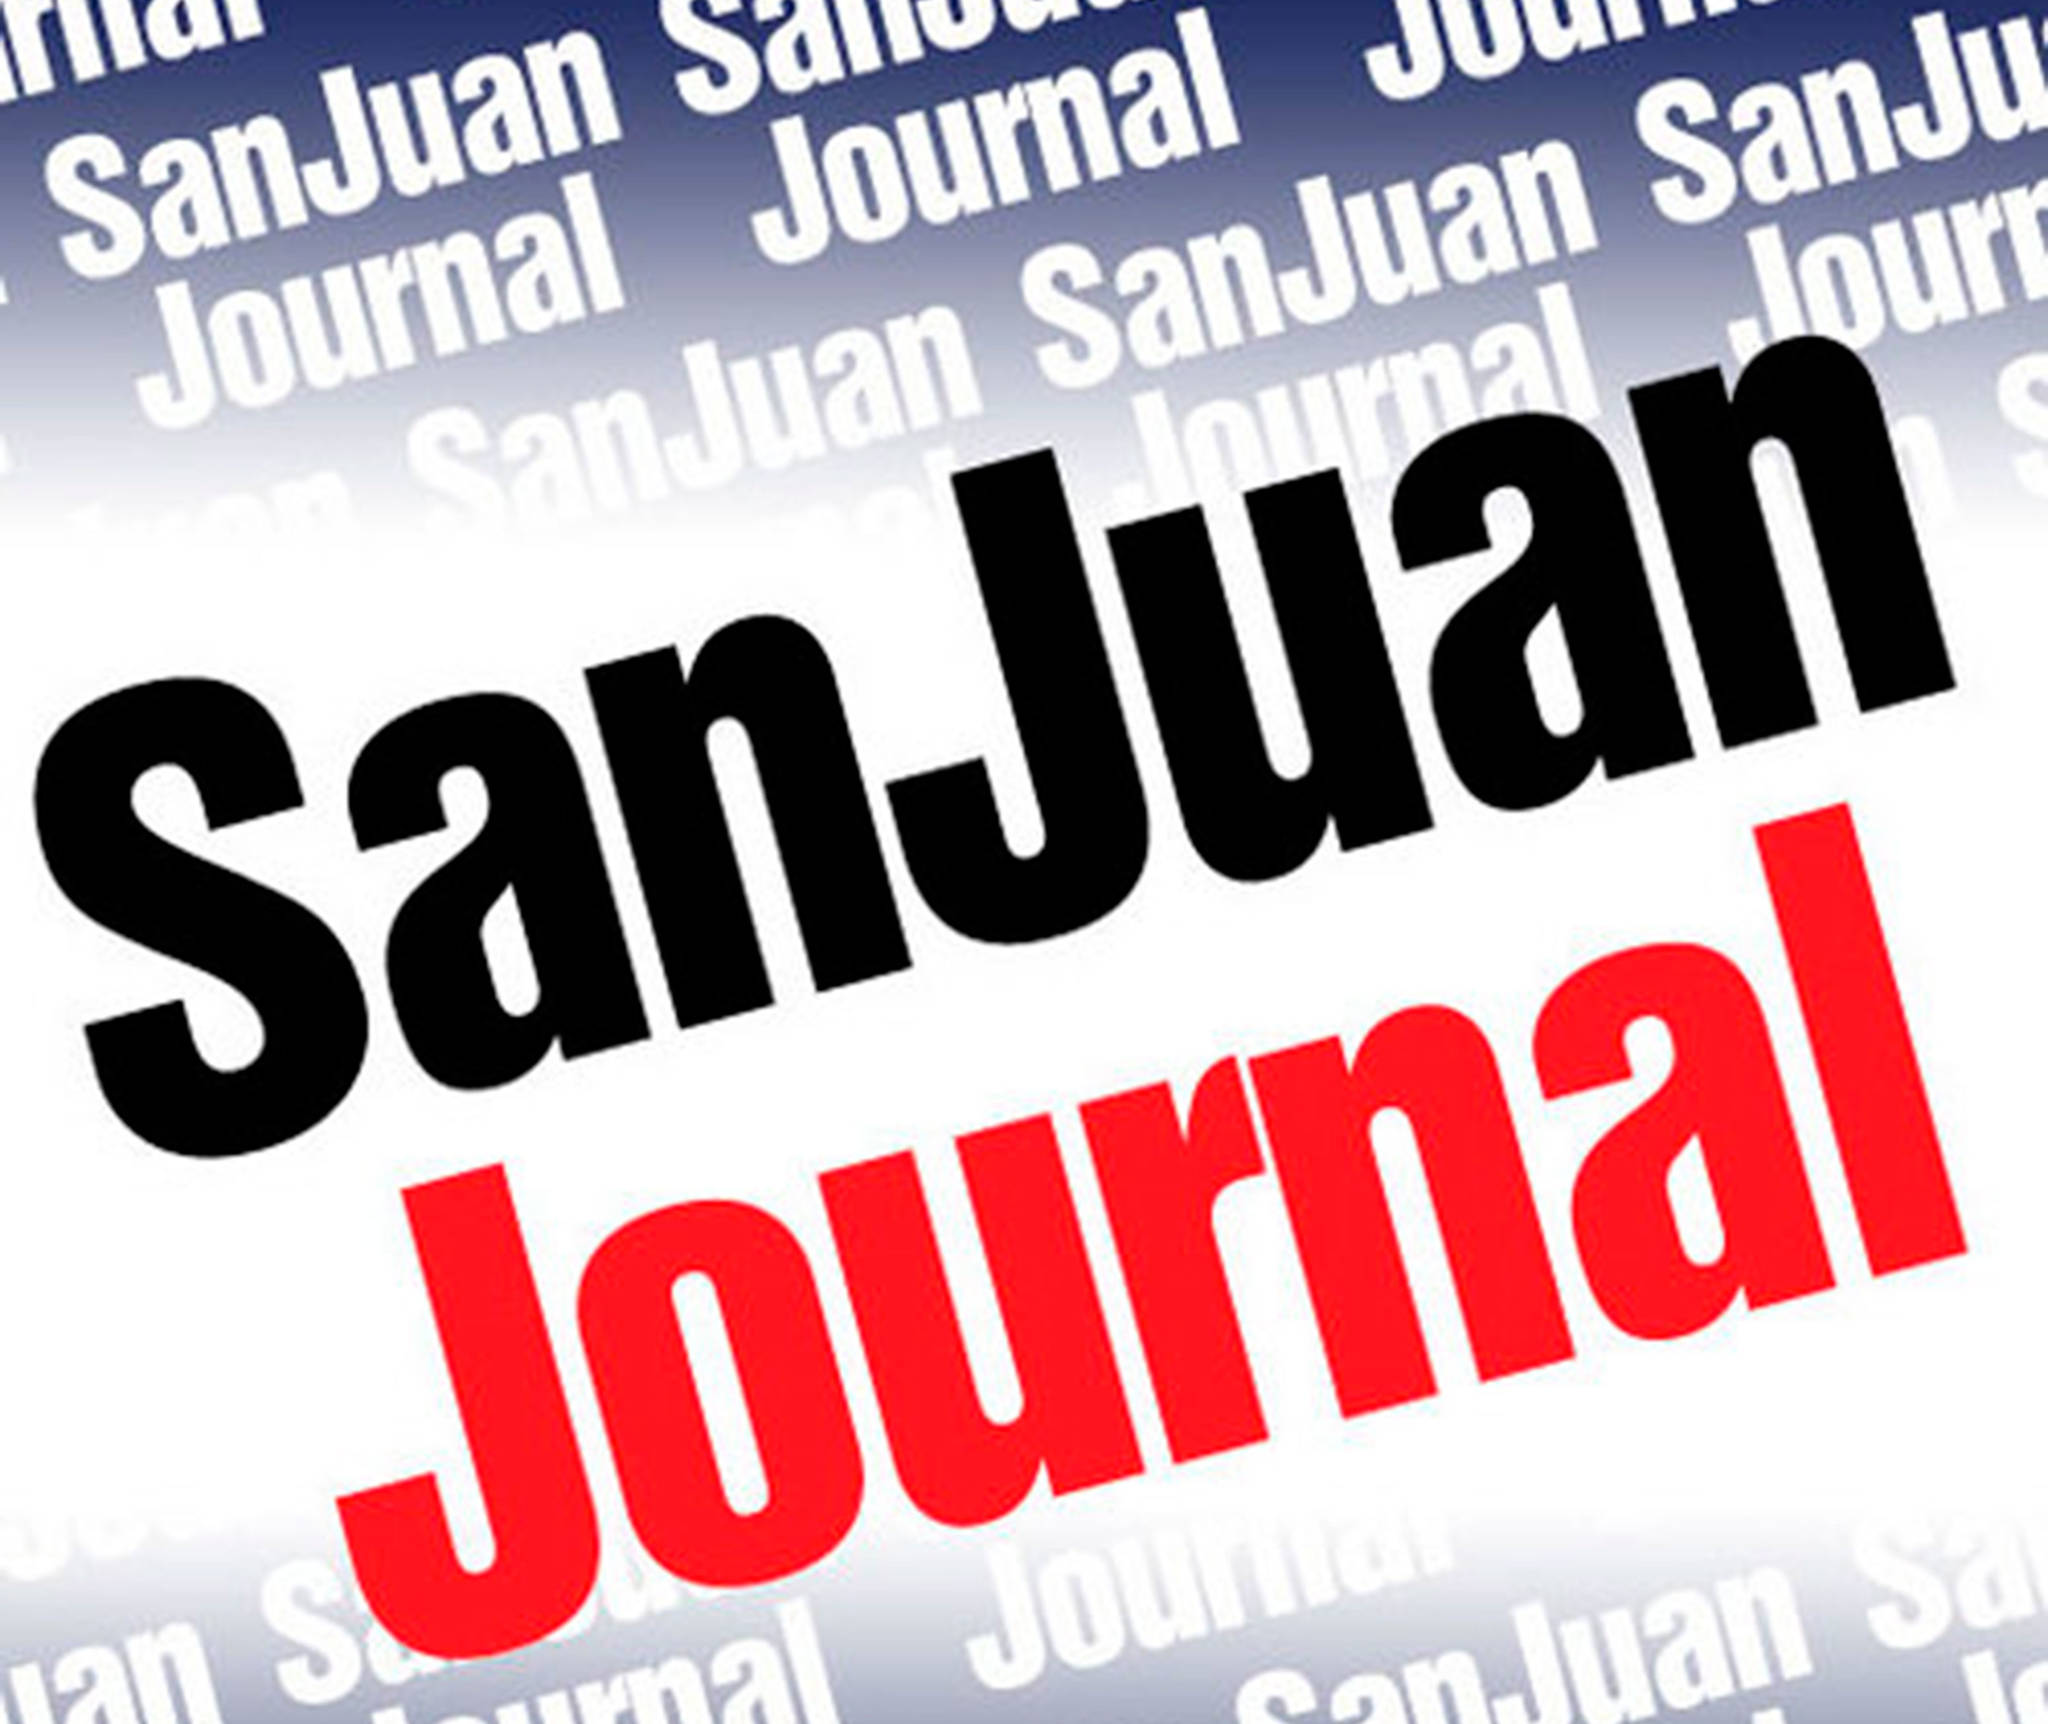 Journal staff win Washington newspaper awards